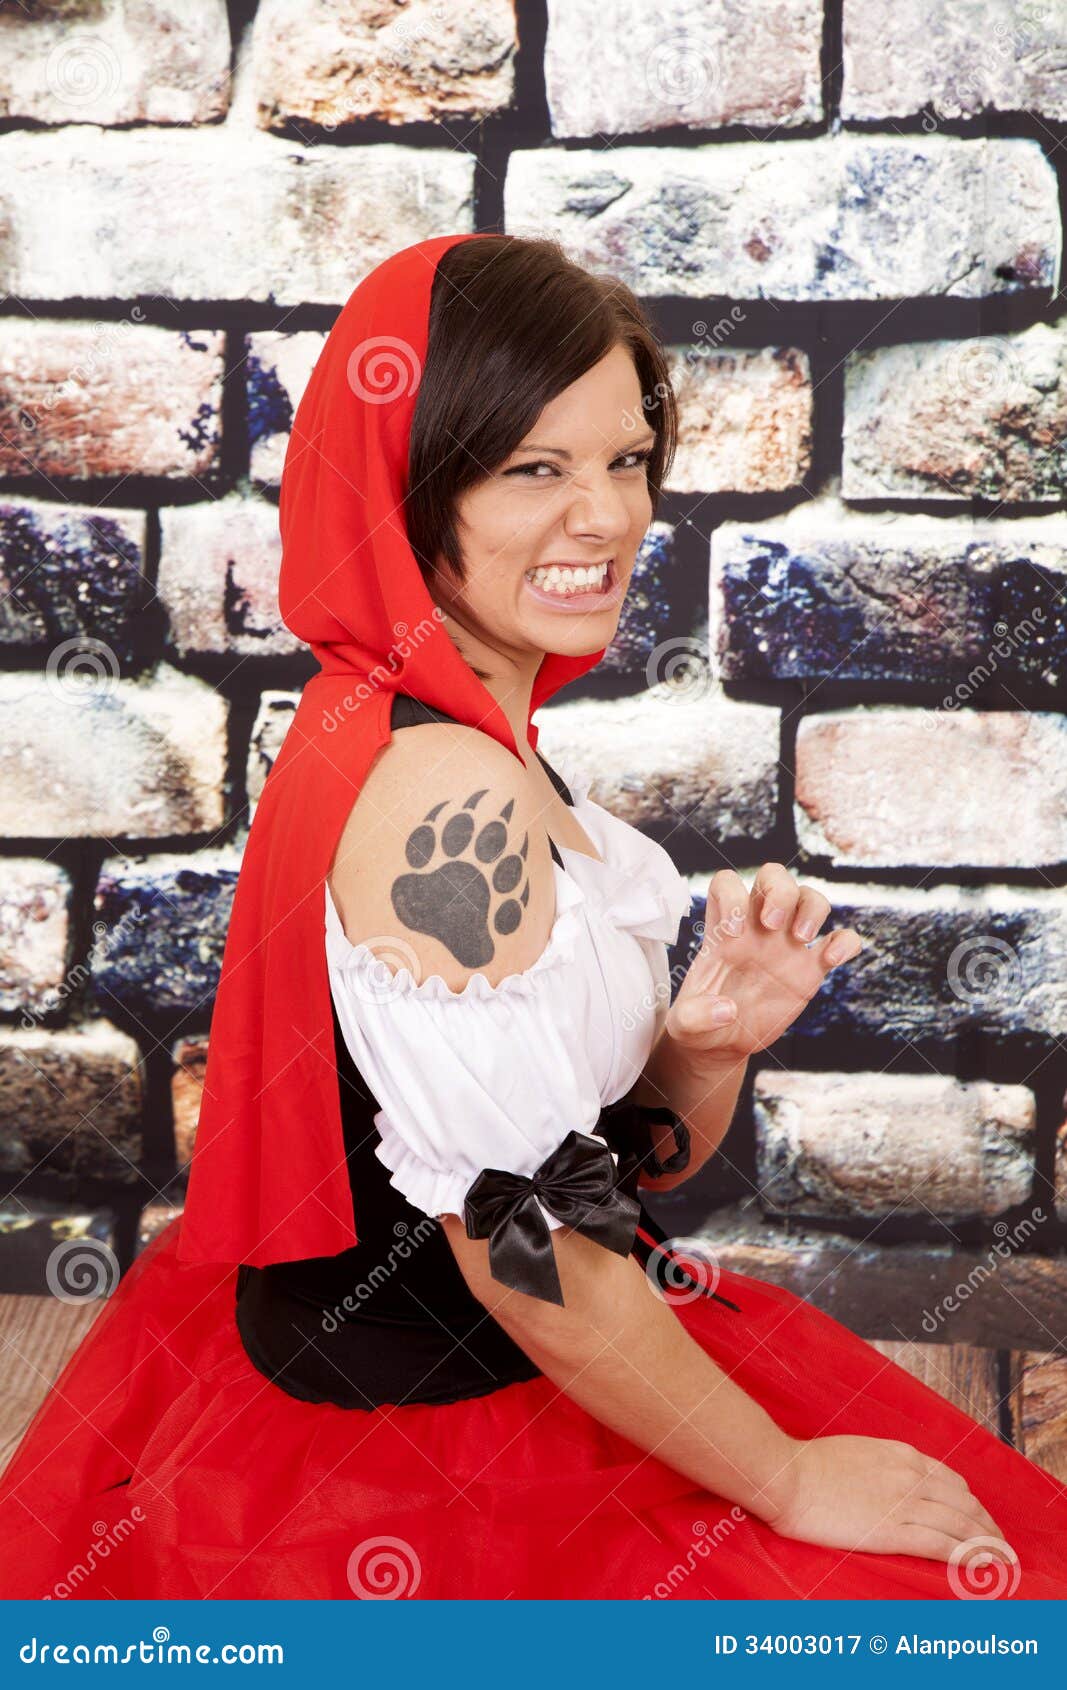 Red Riding Hood Tattoo by nyvz on DeviantArt